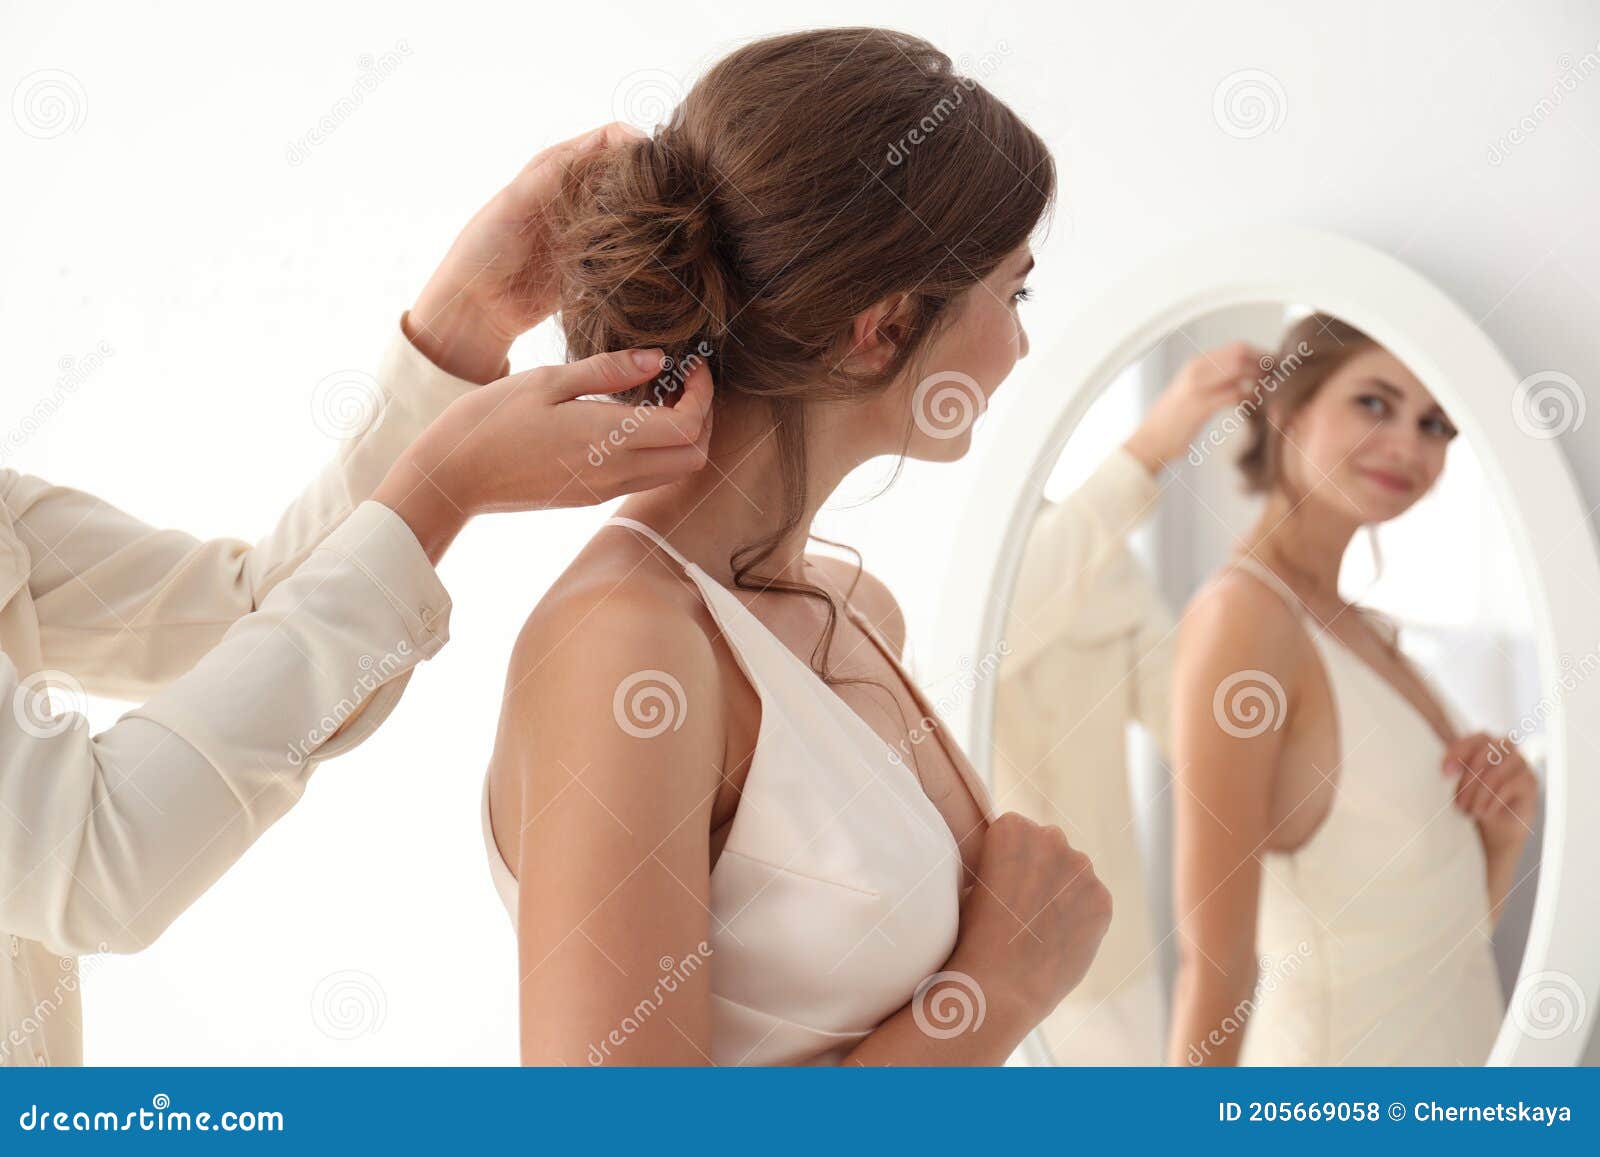 hair stylist preparing bride for her wedding indoors